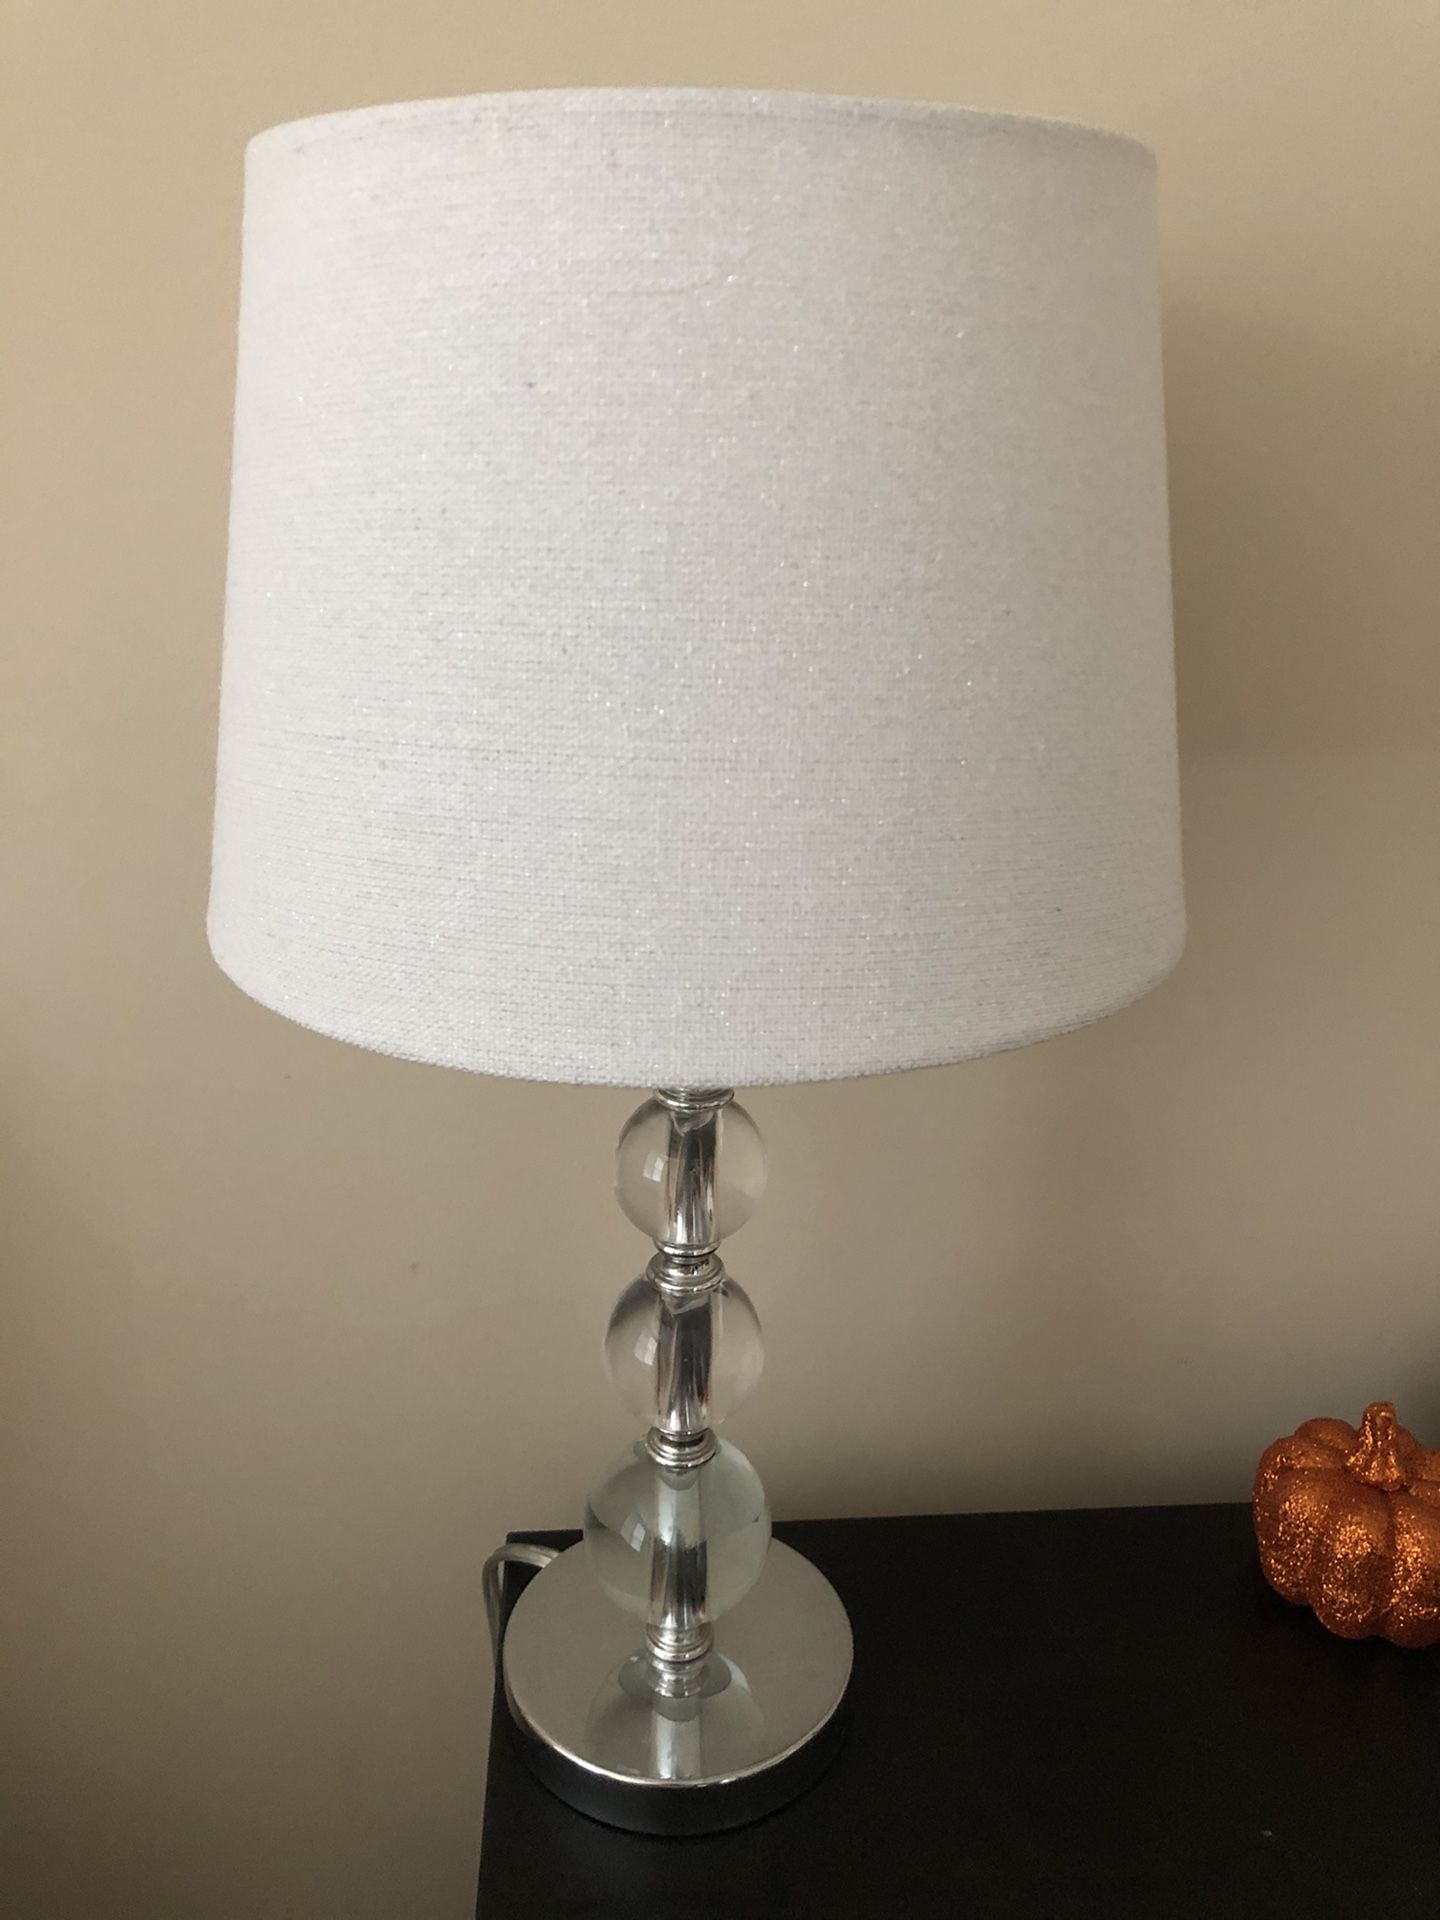 Mirrored lamp with white lamp shade